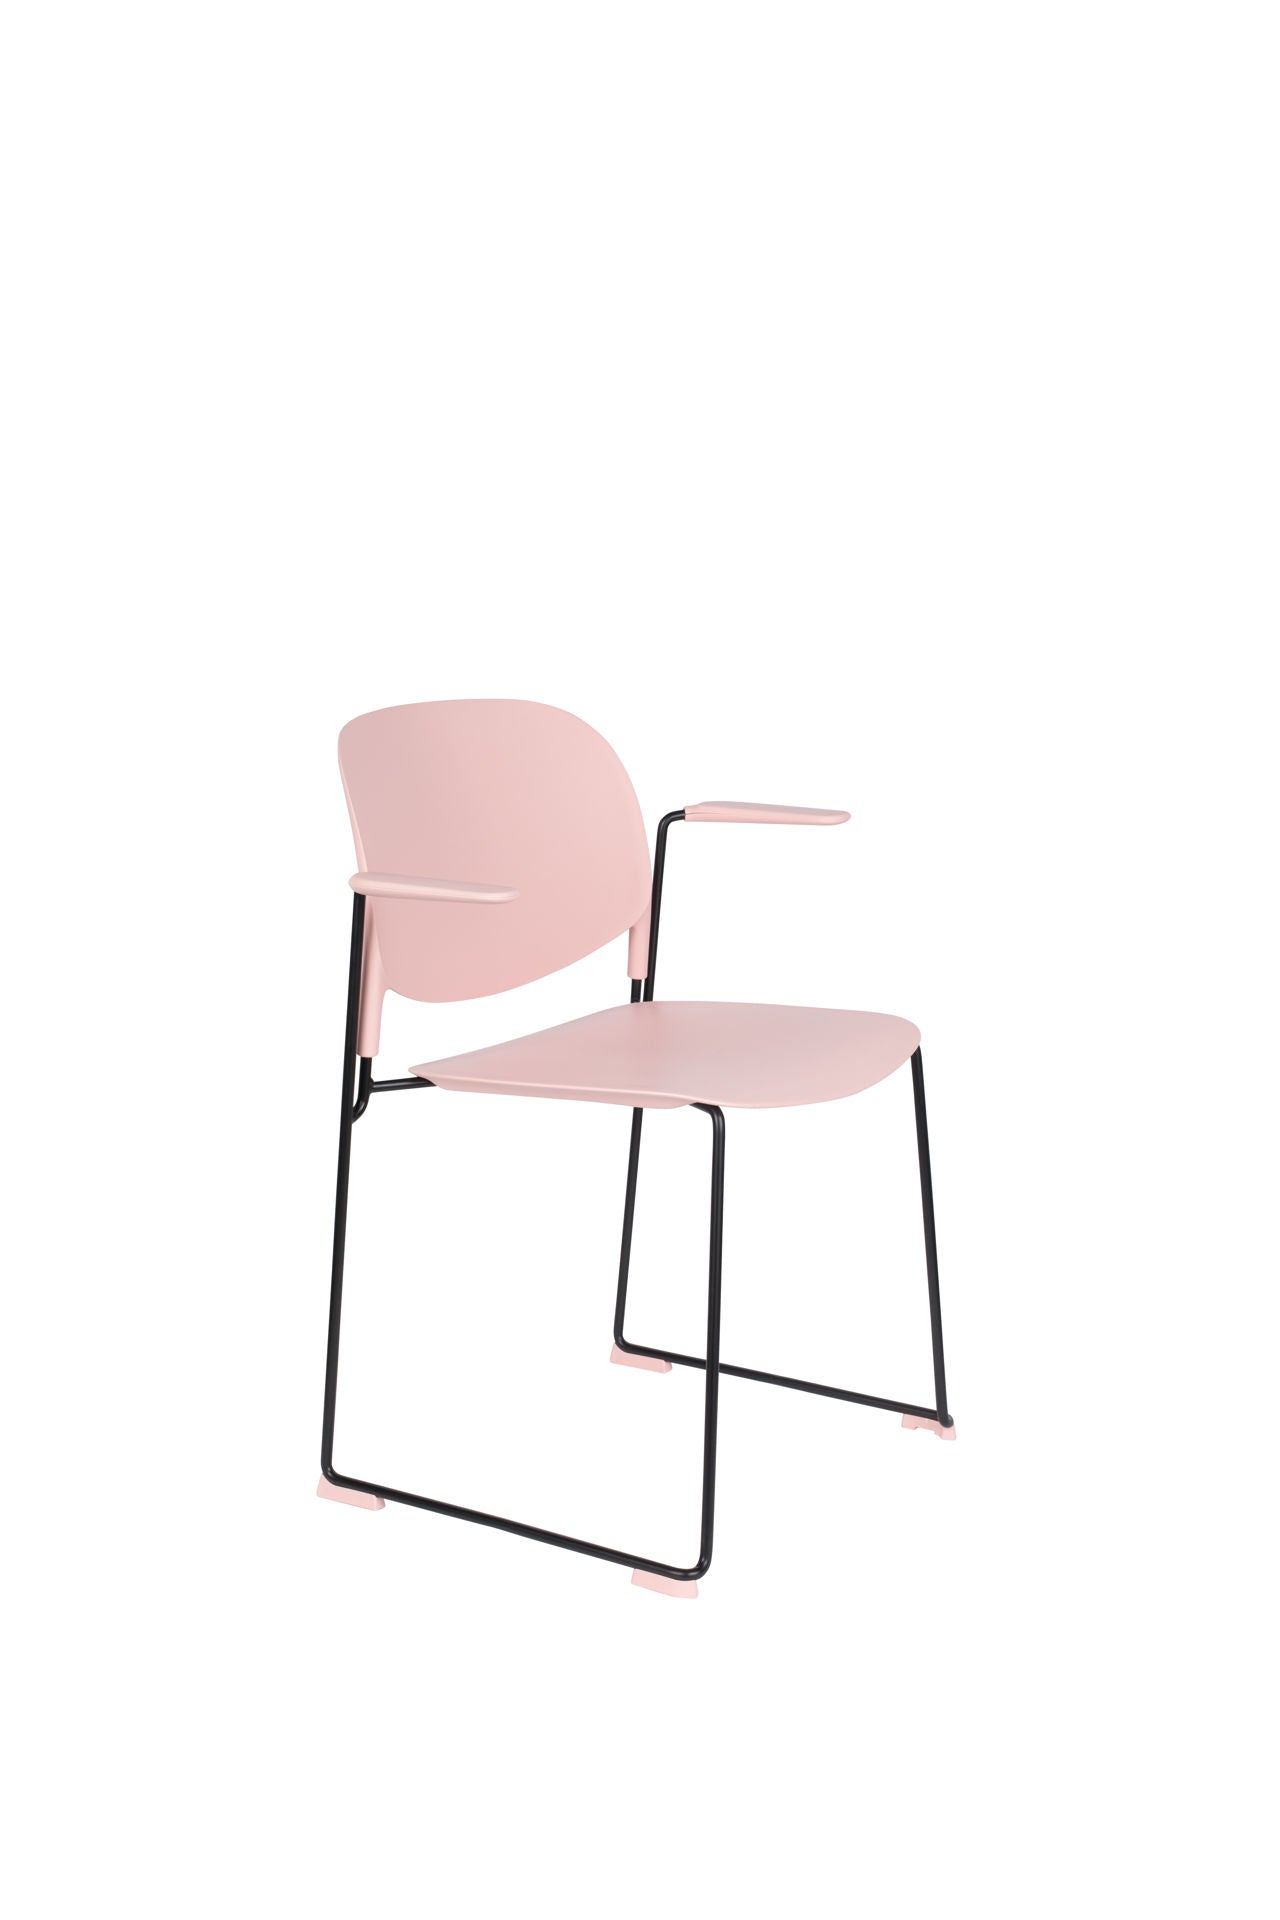 Nancy's Terrace Heights Chair - Retro - Pink, Black - Polypropylene, Steel, Plastic - 53 cm x 63.5 cm x 80.5 cm